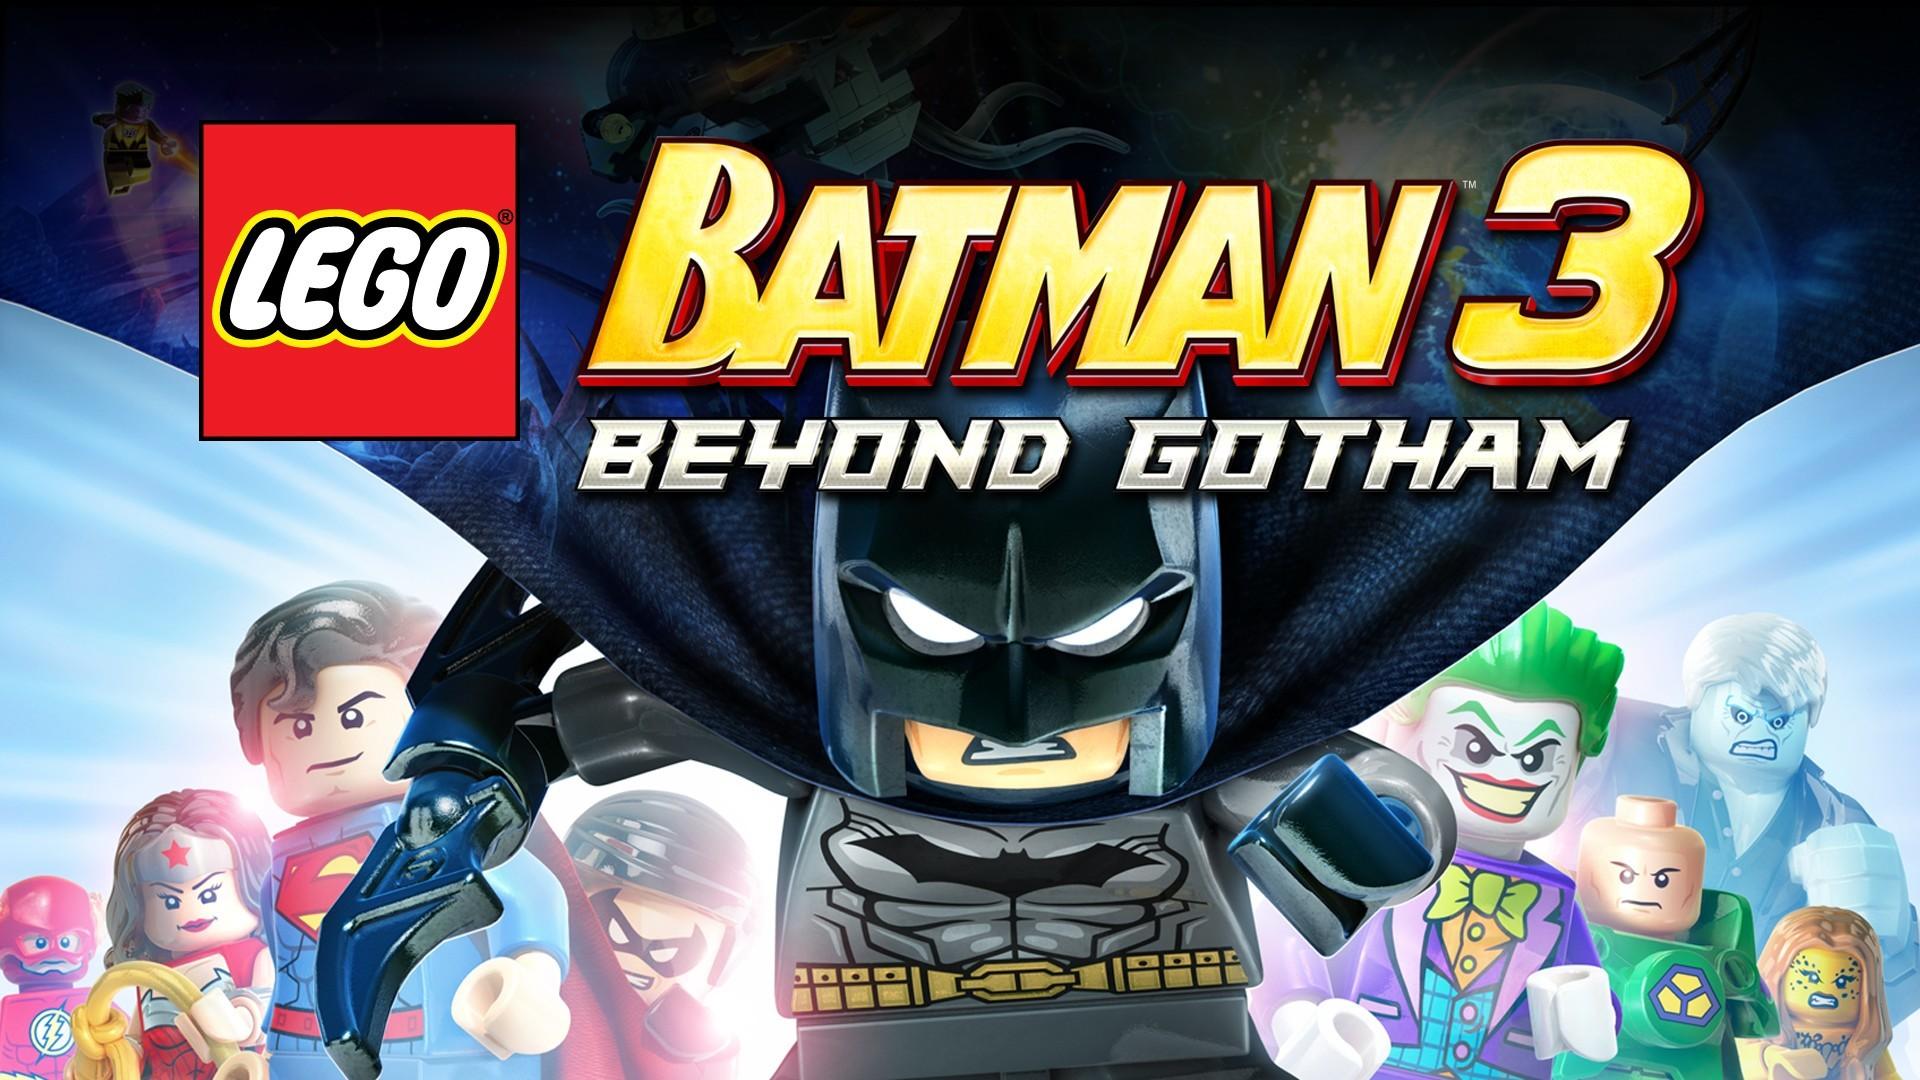 LEGO Batman 3: Beyond Gotham. PC Steam Game